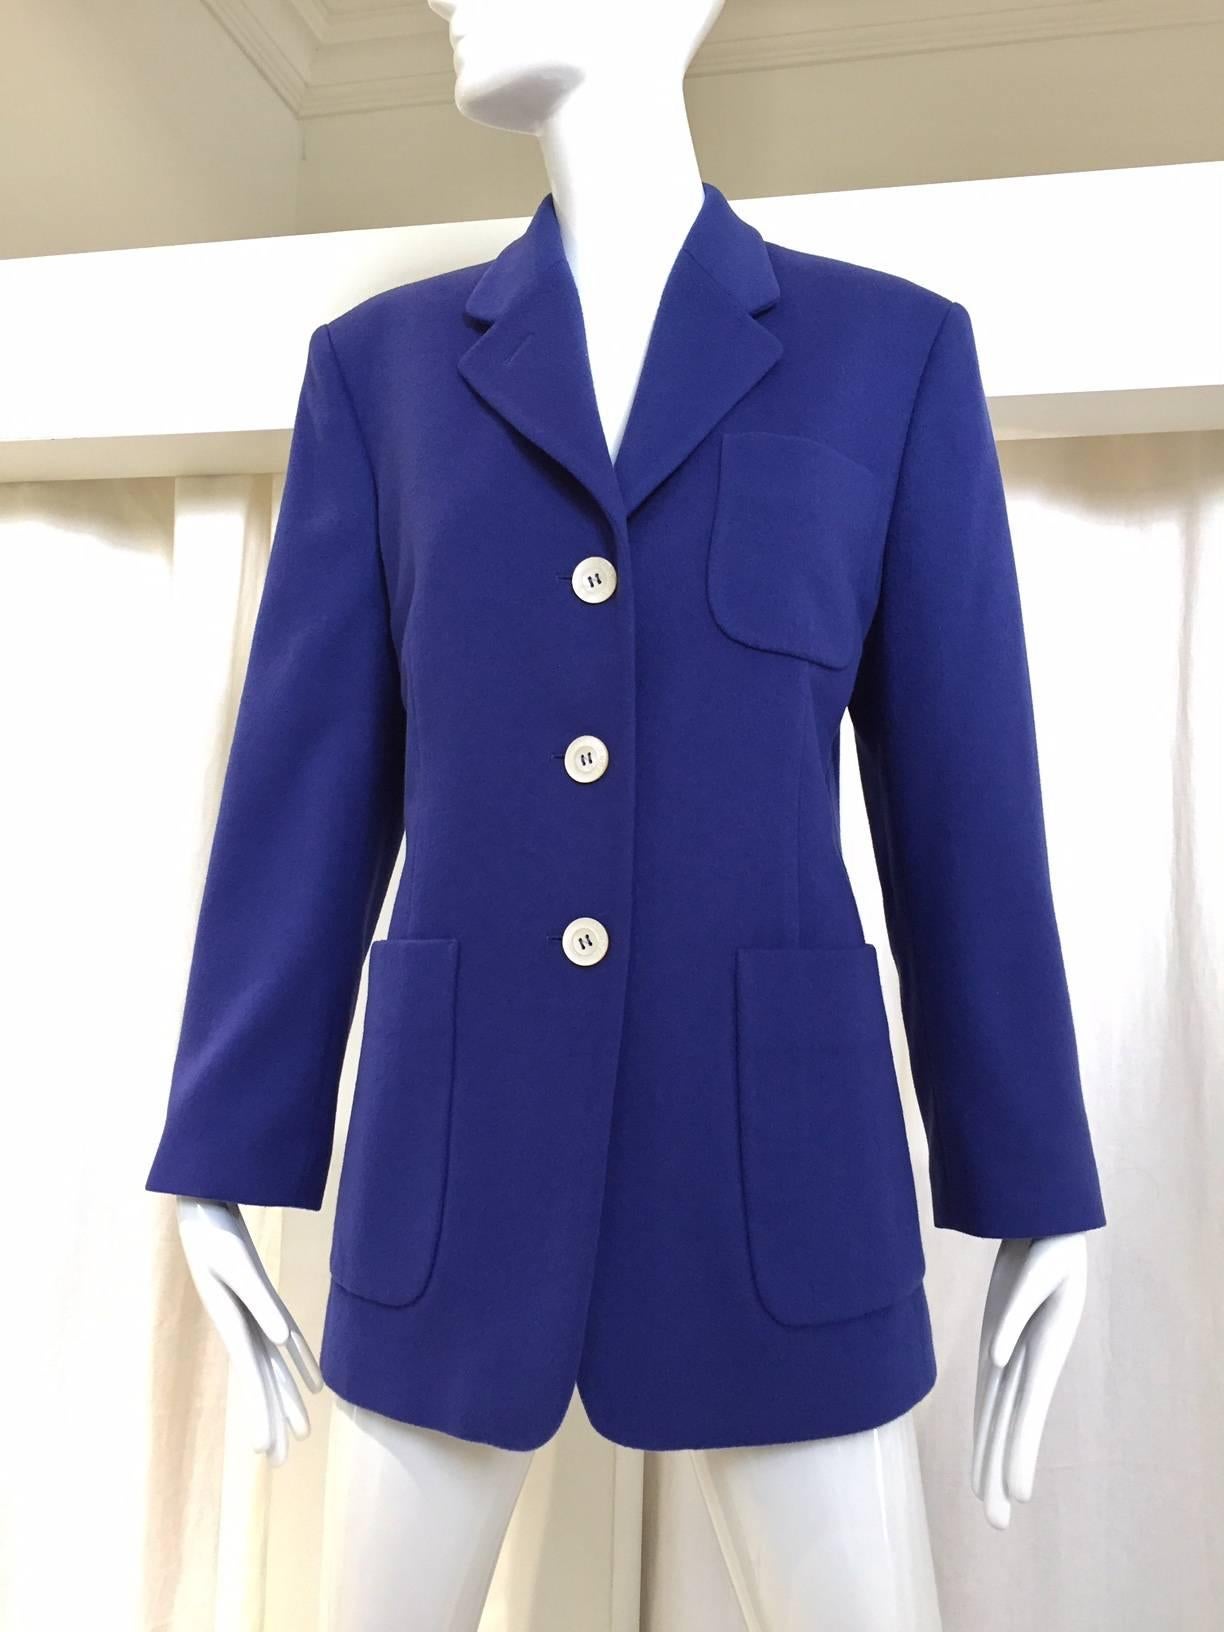 vintage Jil Sander cashmere blazer/ Jacket Lined in silk. very soft!
Excellent condition.
Bust: 38